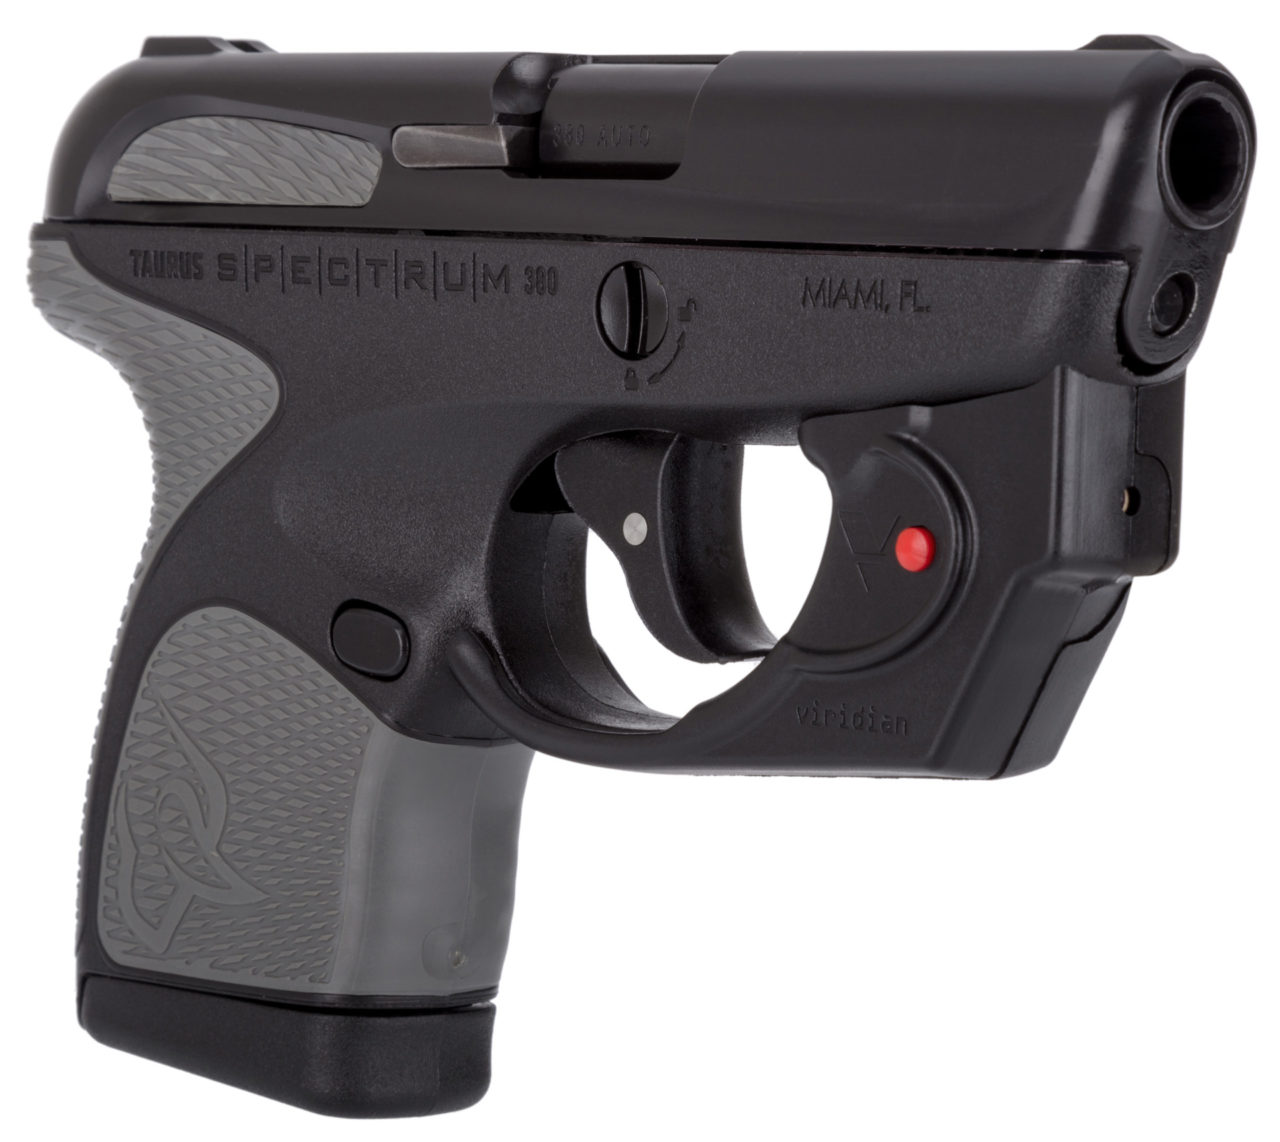 Taurus® SPECTRUM™ .380 Auto Pistol Now Available with Viridian® Laser